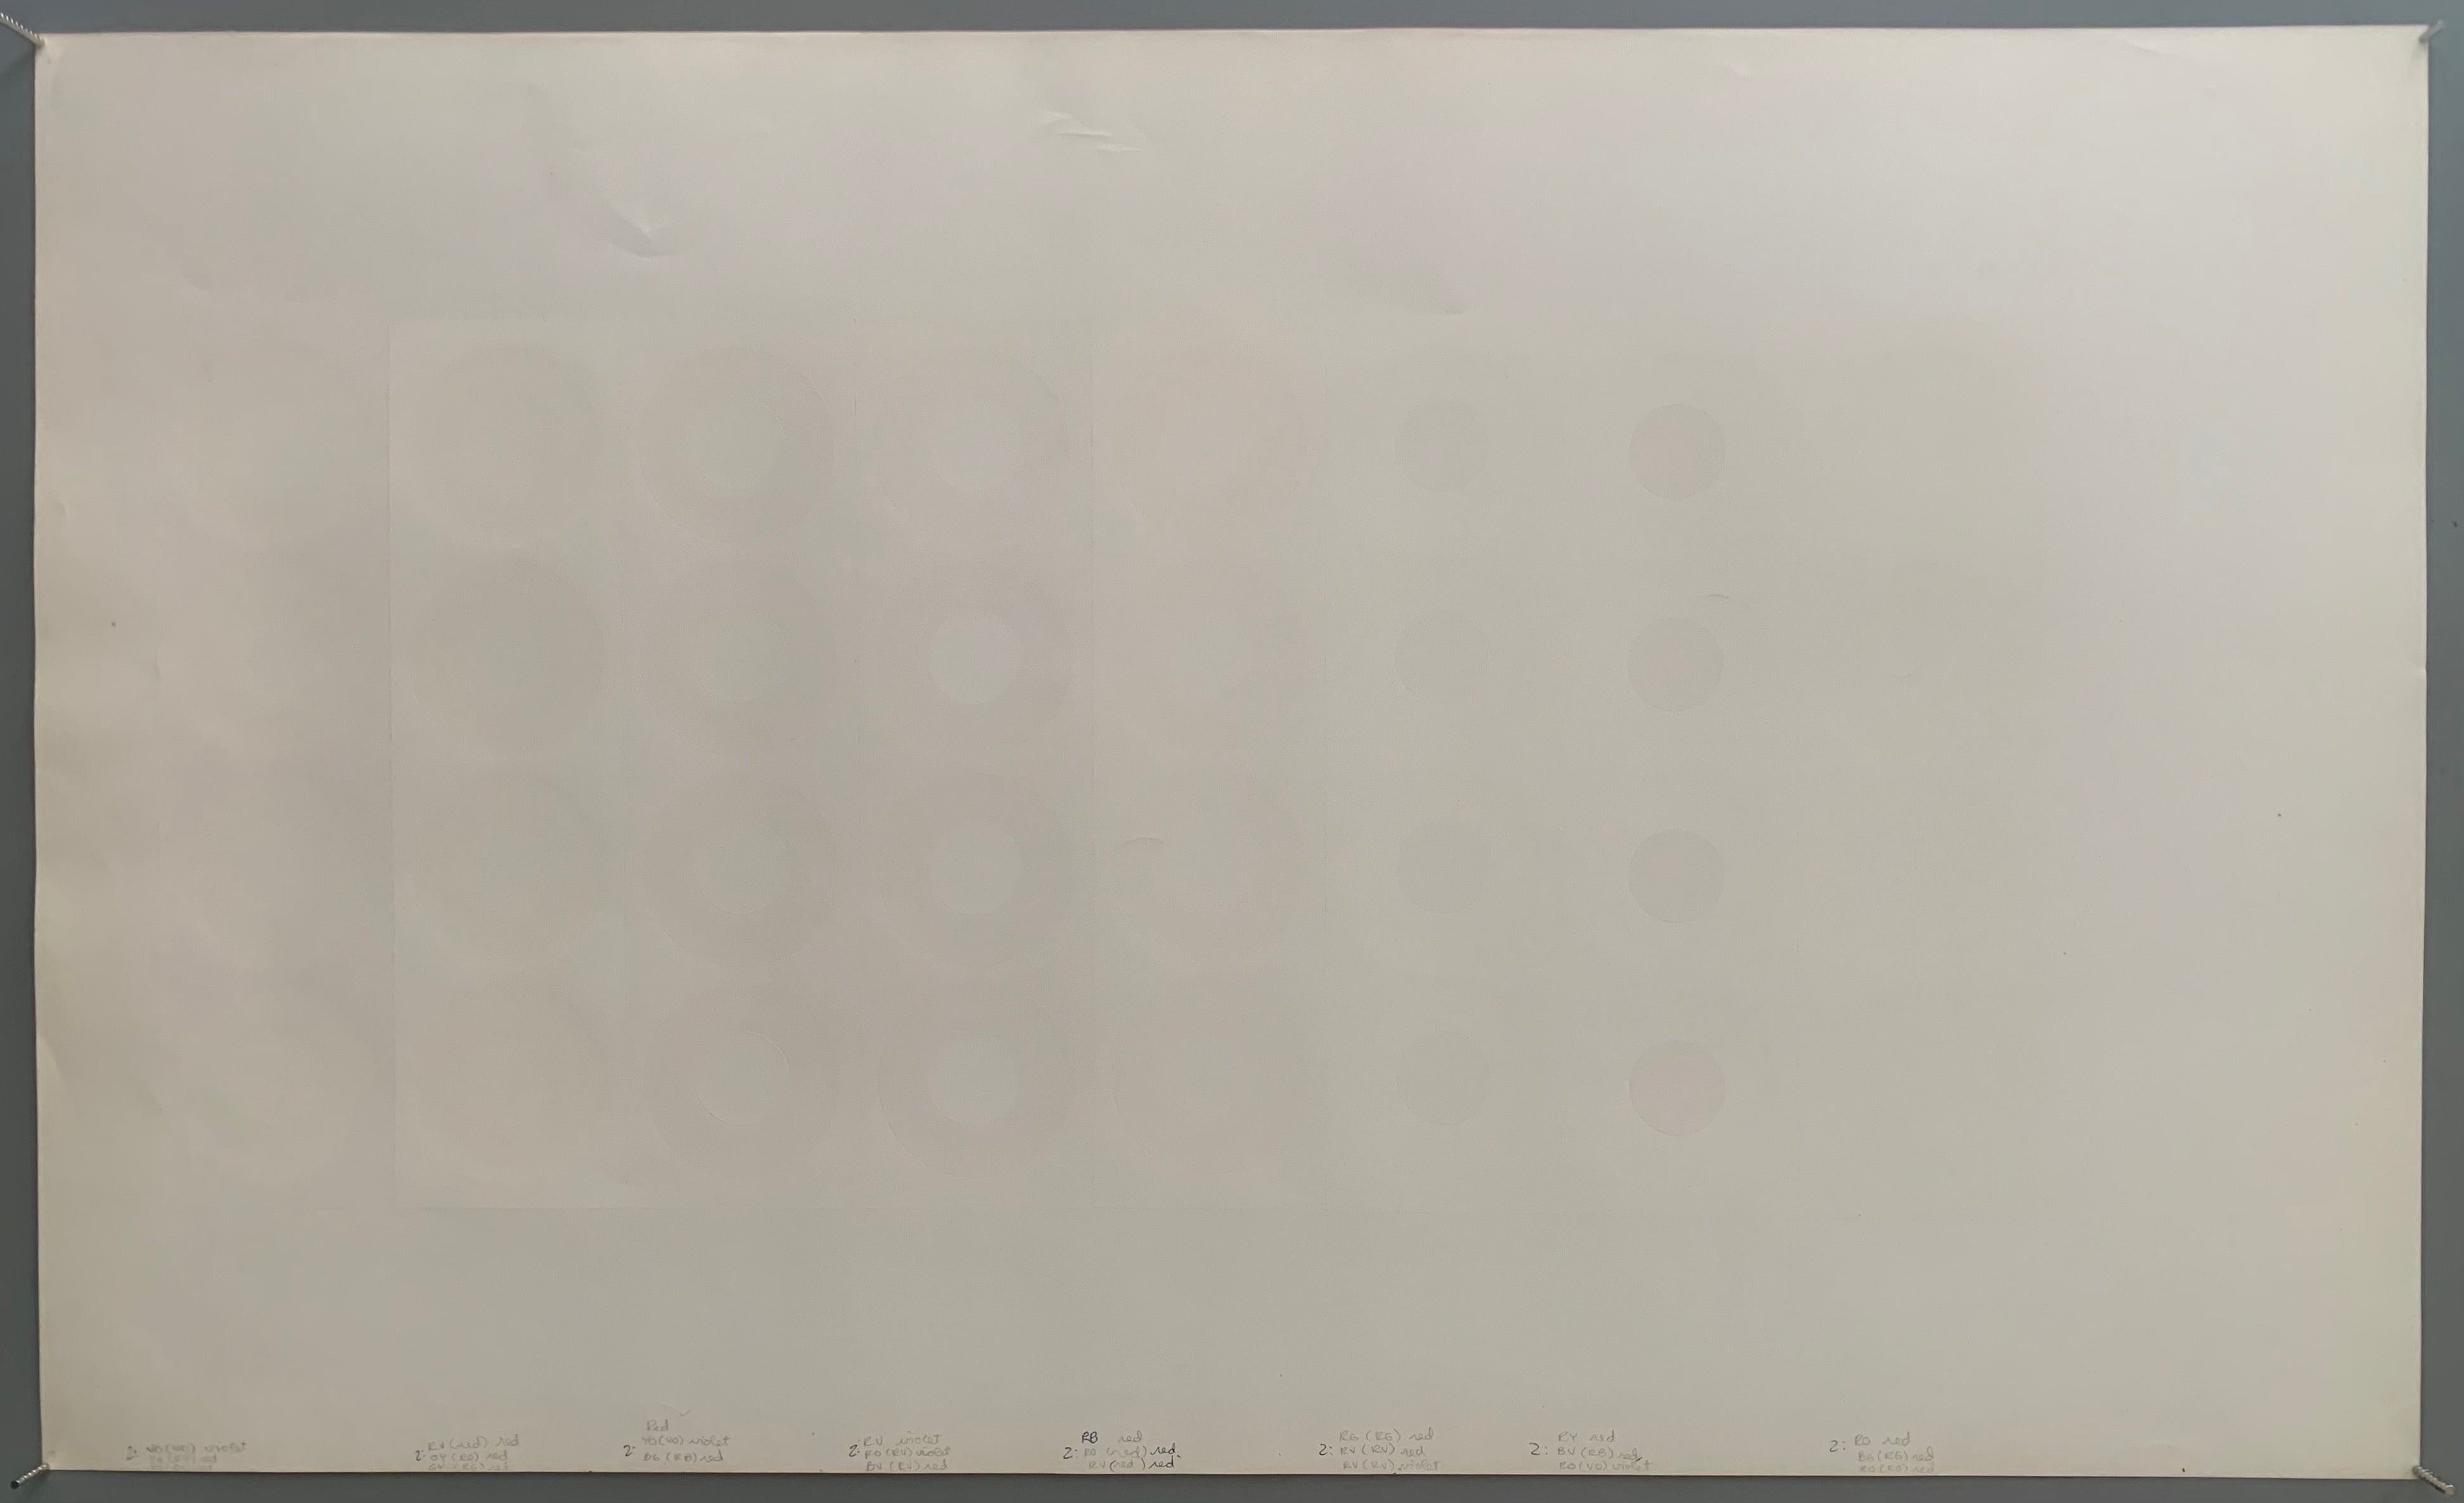 Eigth White Panels #4